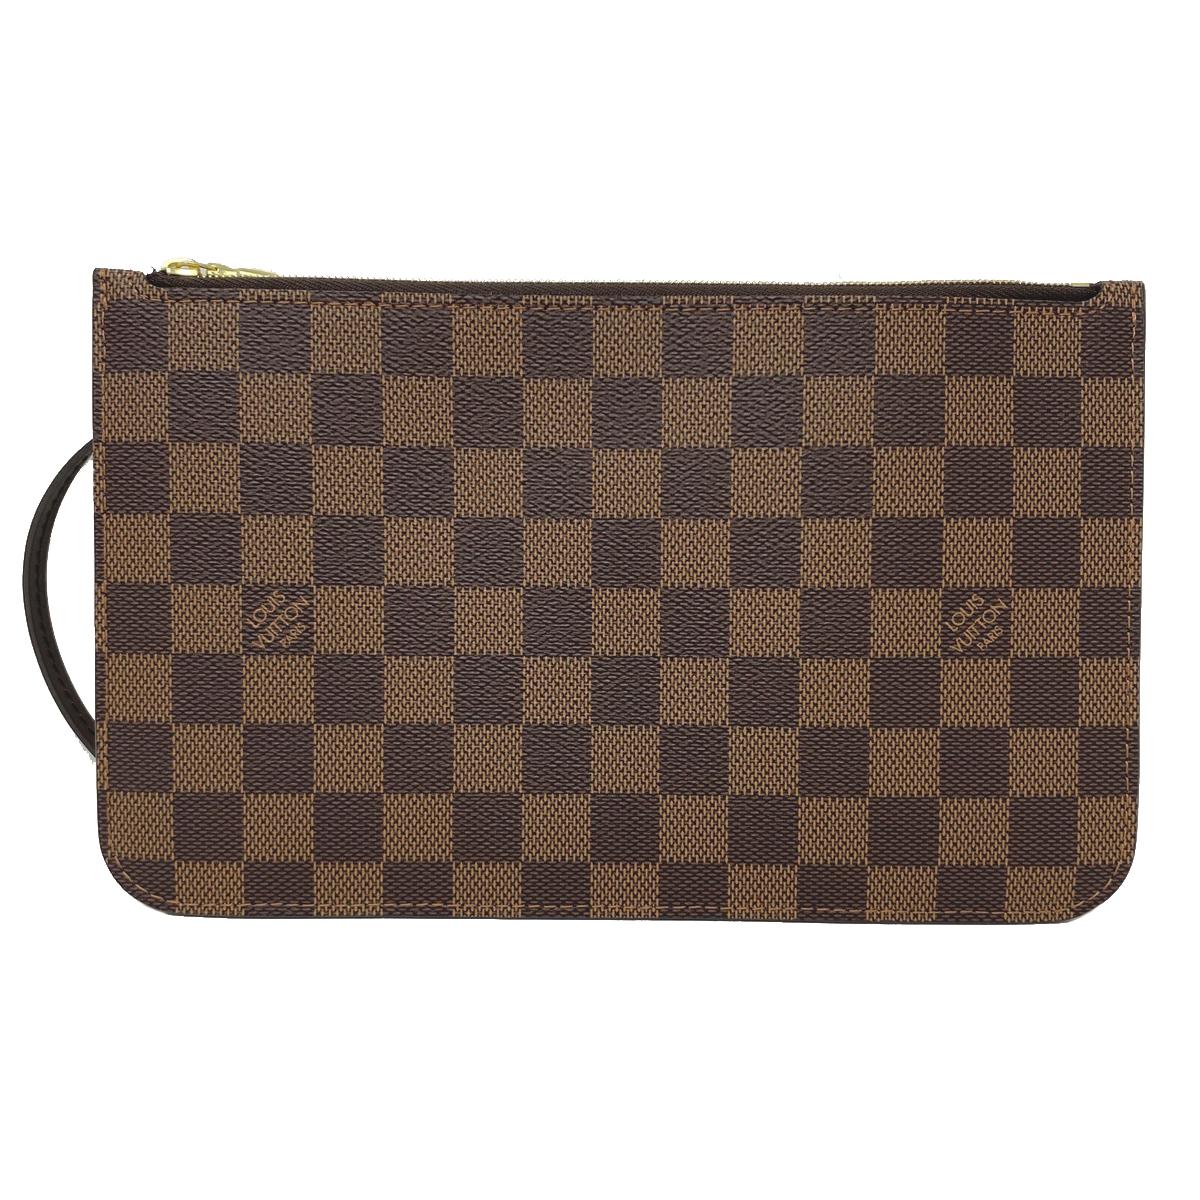 Louis Vuitton Neverfull MM Cherry Damier Ebene Leather Canvas Tote Handbag 3